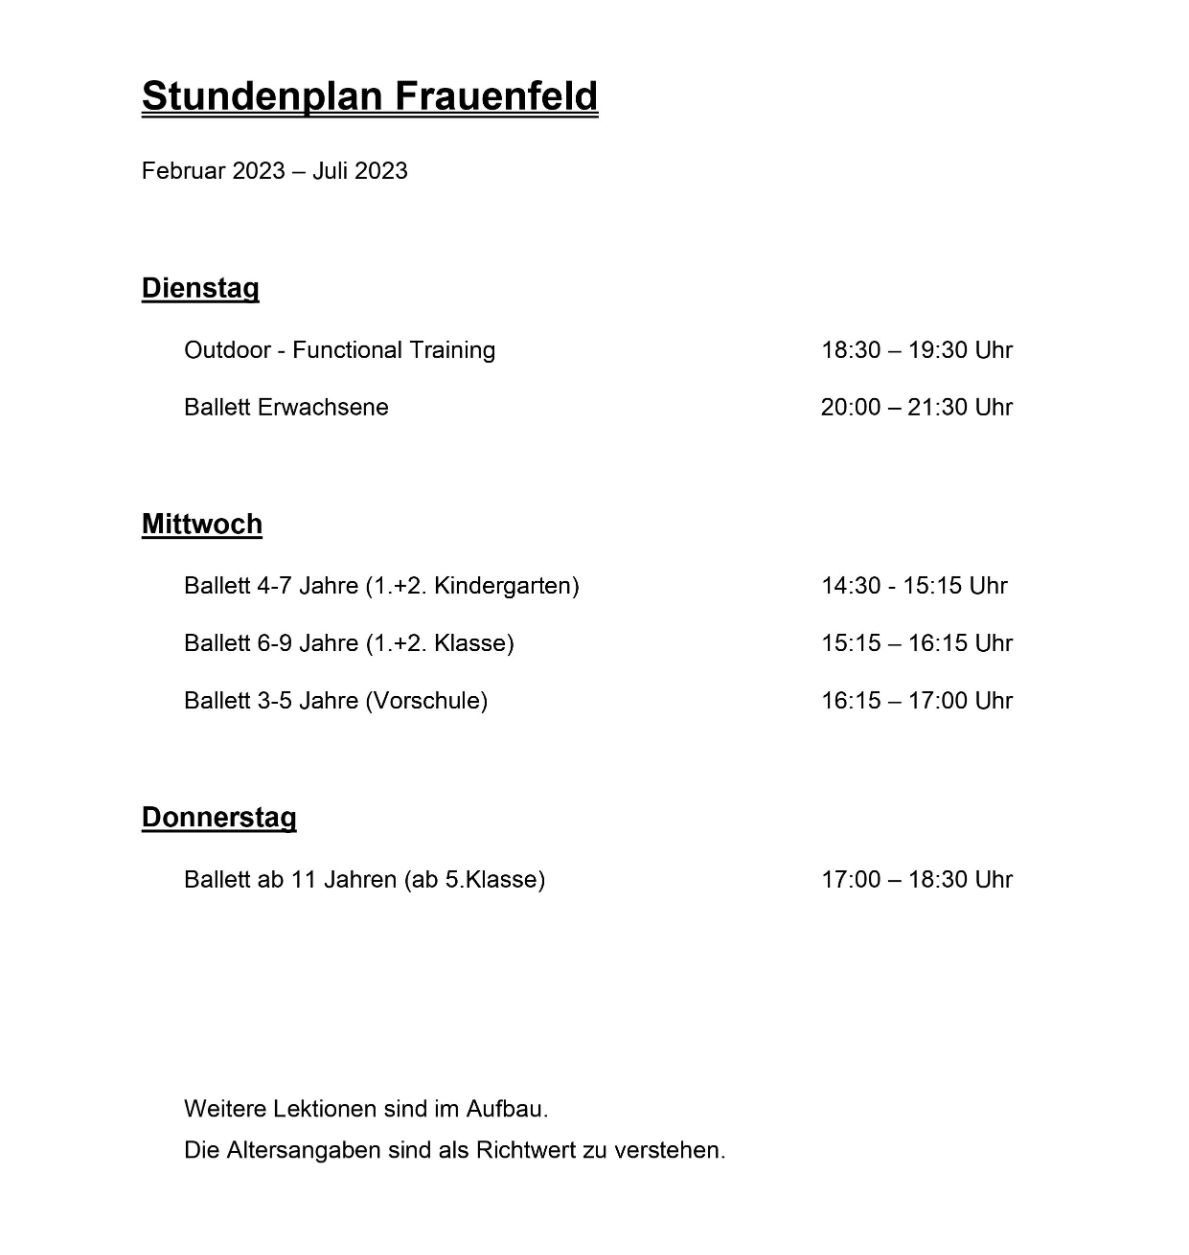 Stundenplan Frauenfeld 2023